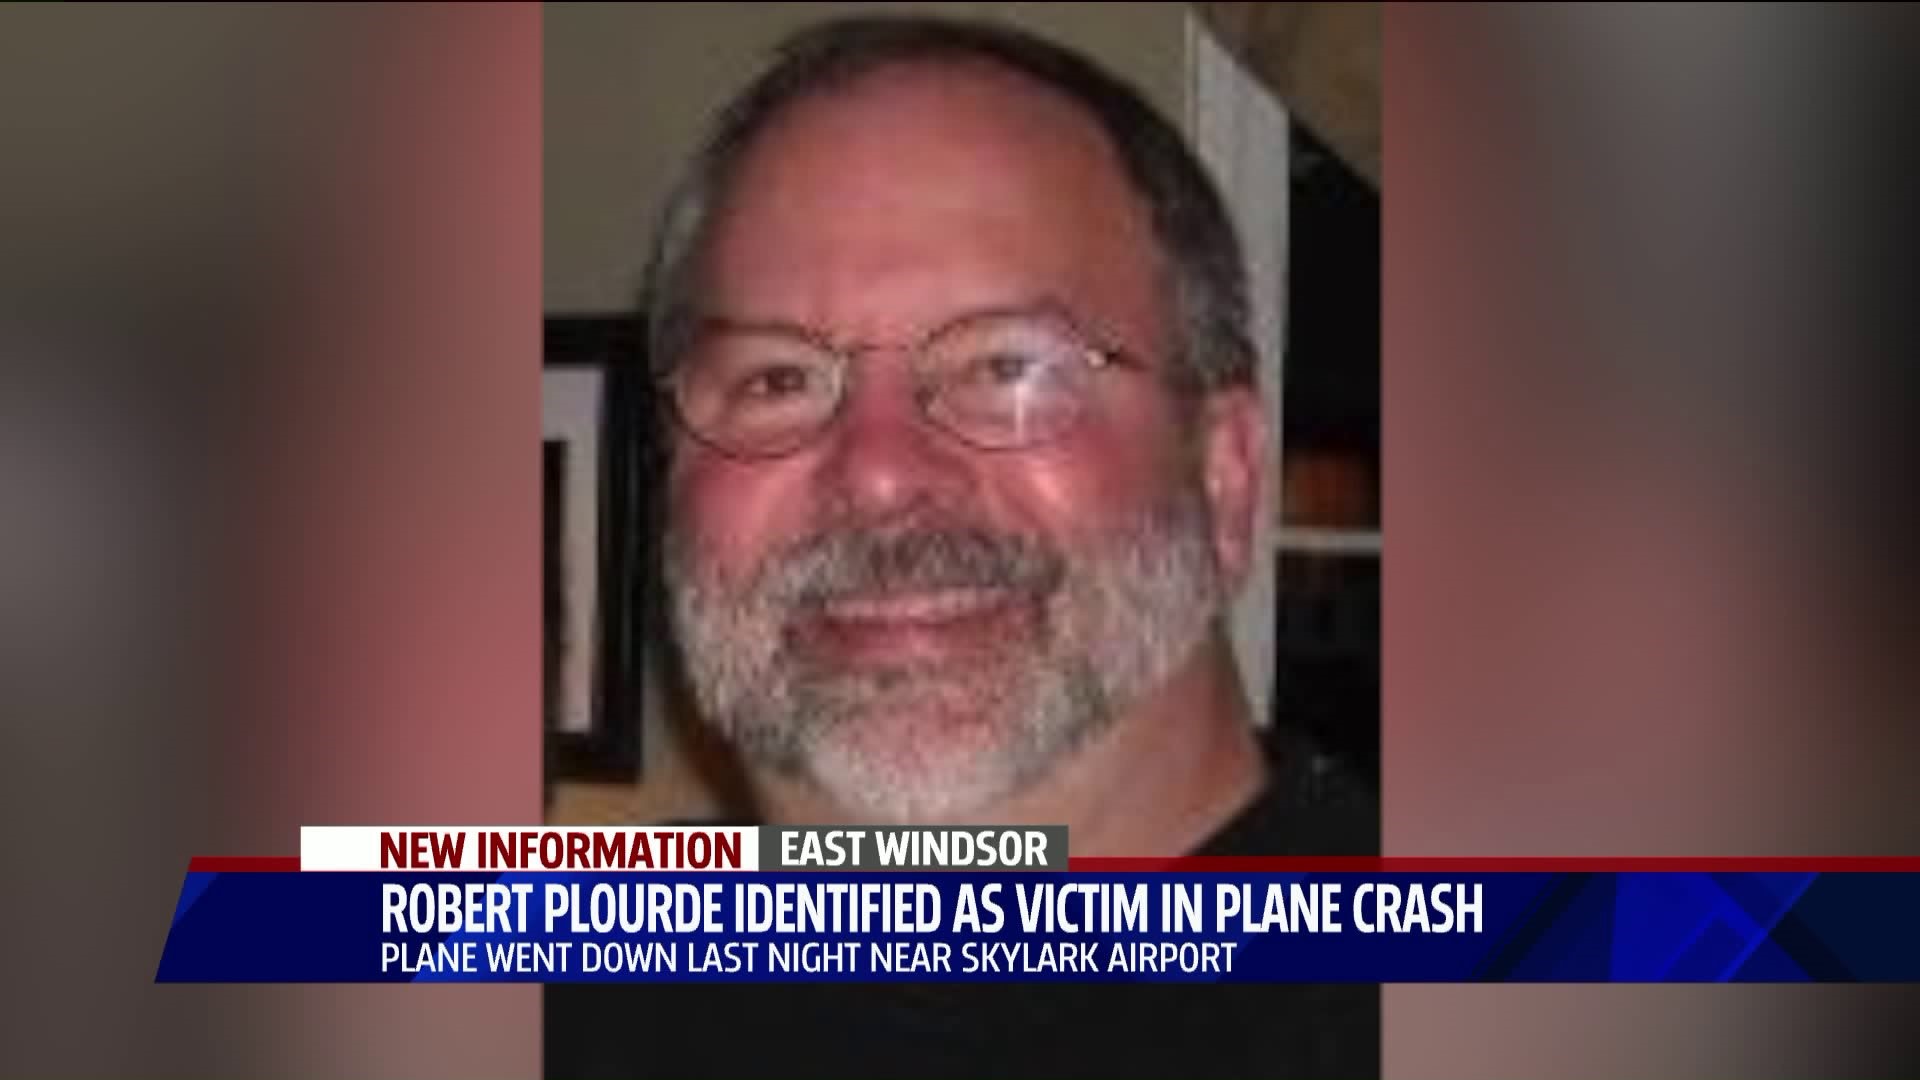 Family members identify man killed in East Windsor plane crash